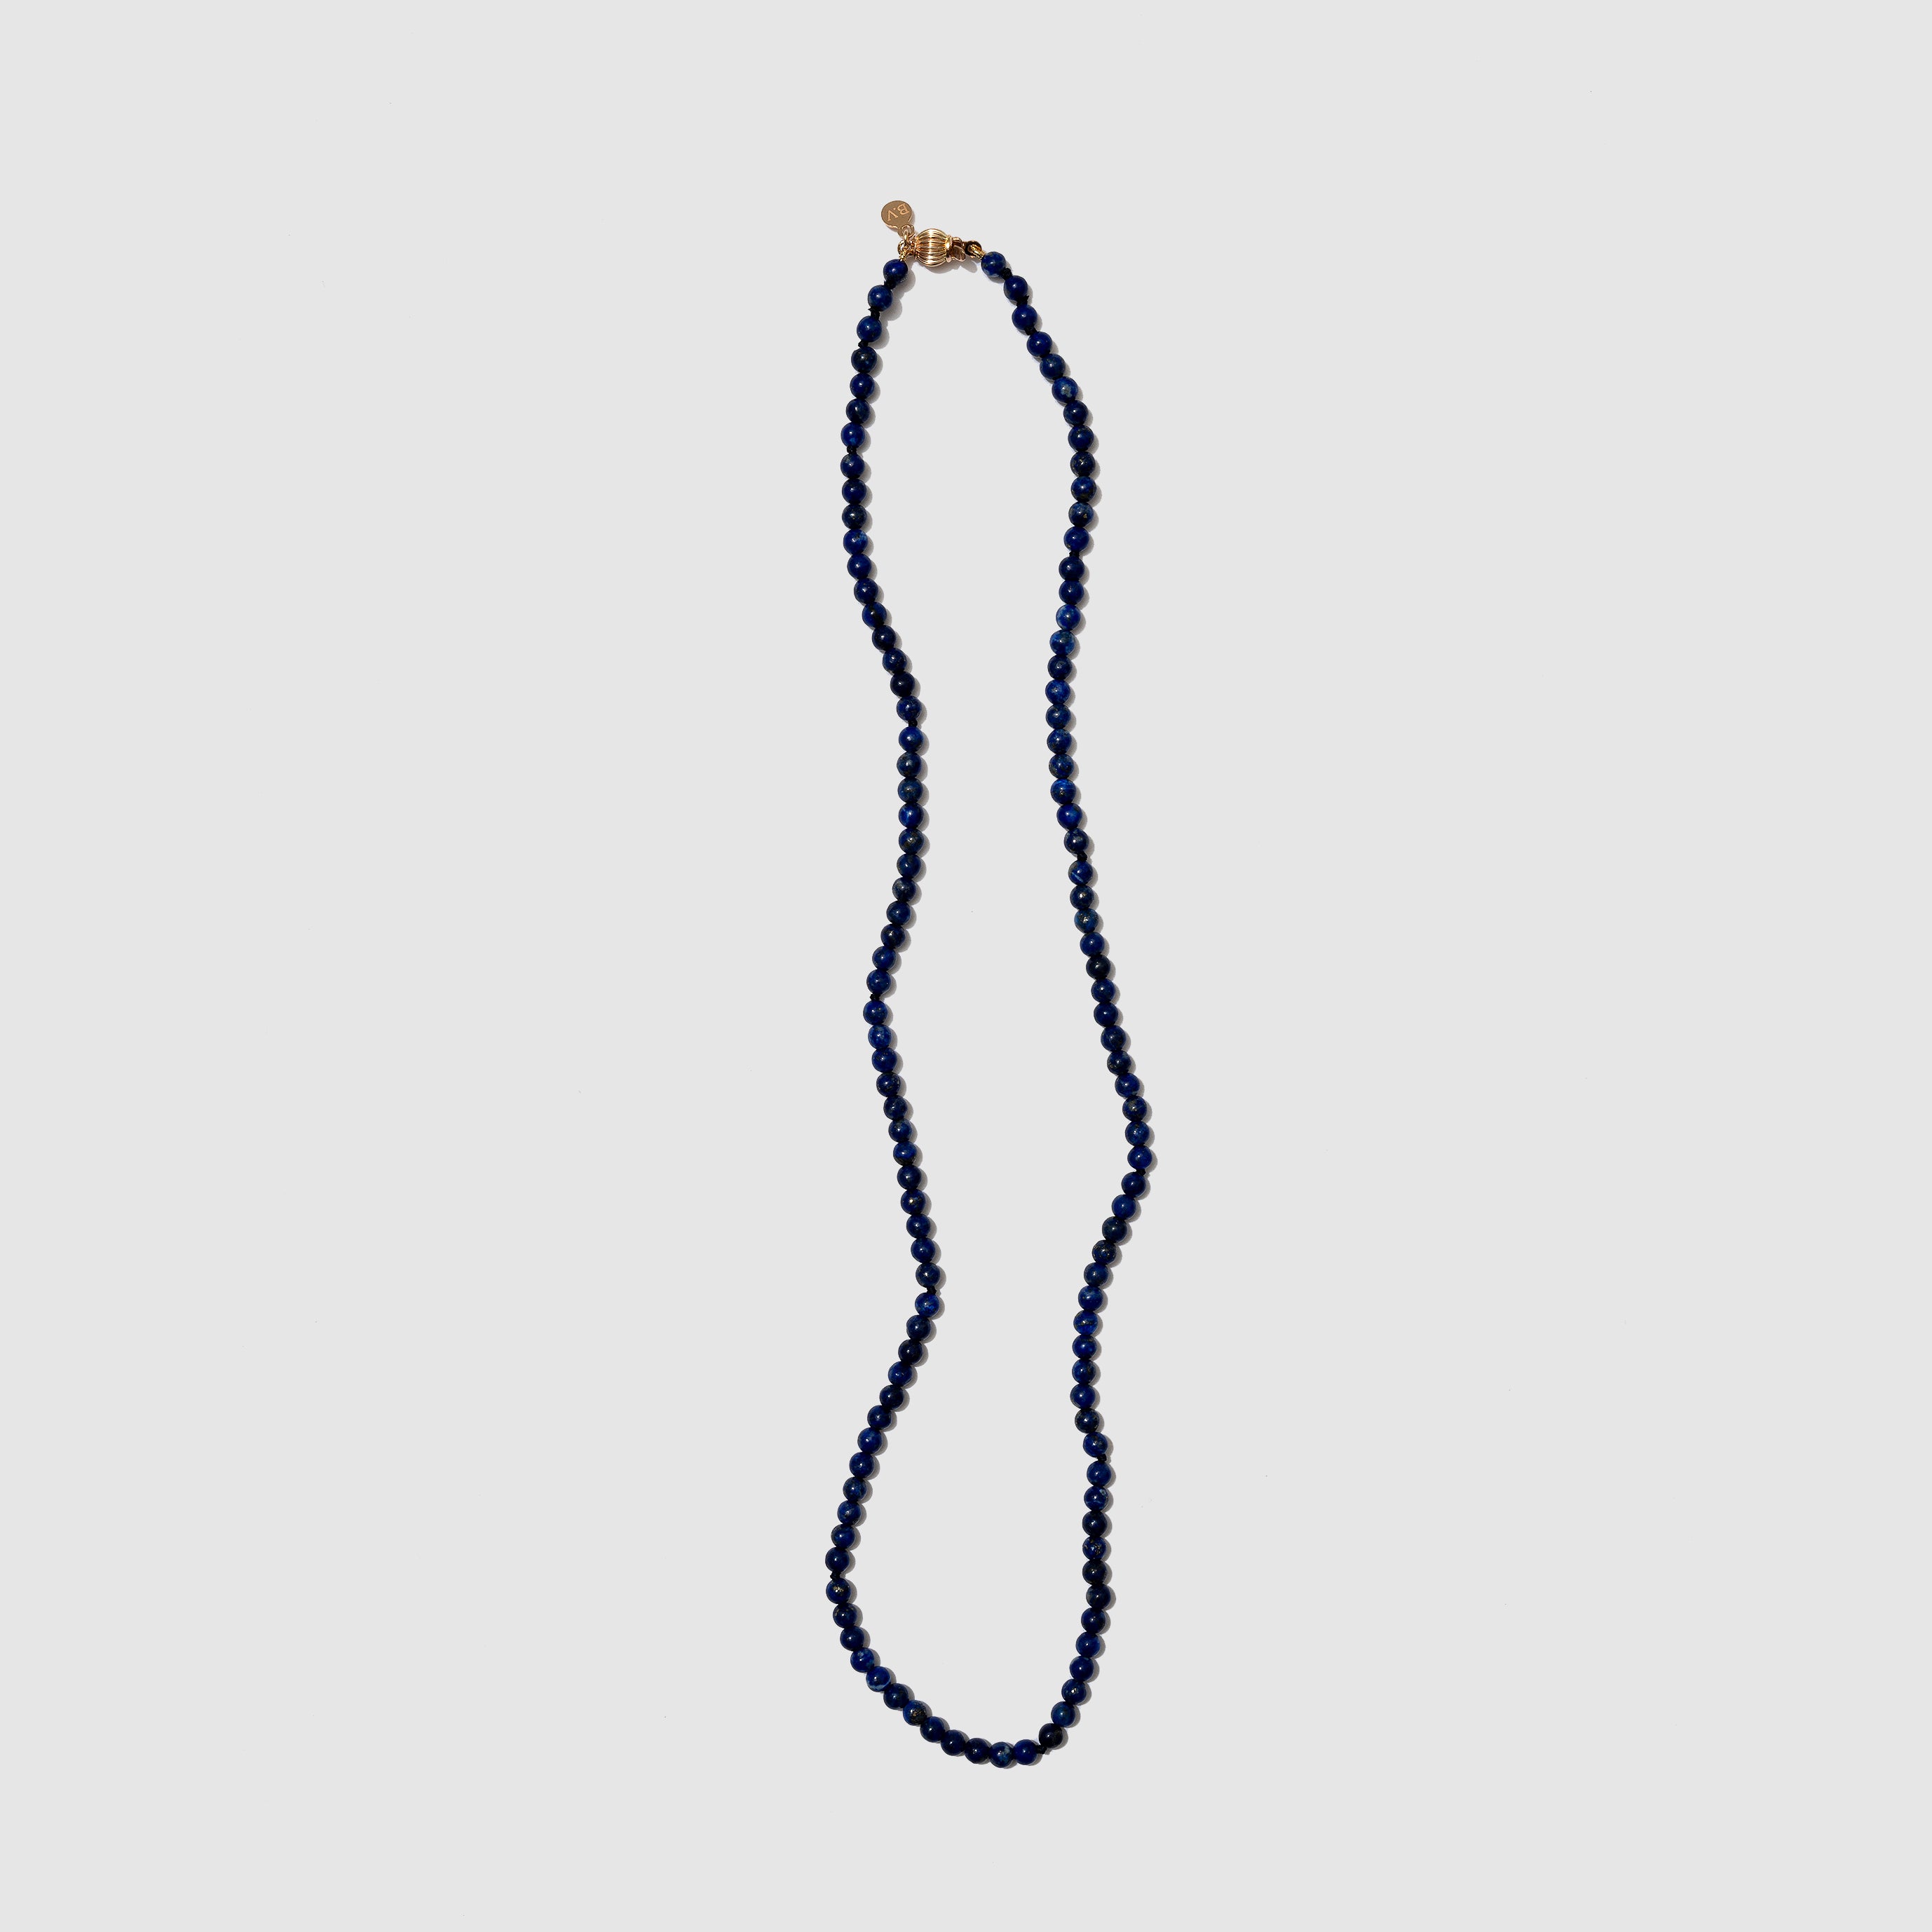  Nike (Victory) Prayer Bead Necklace in Lapis Lazuli